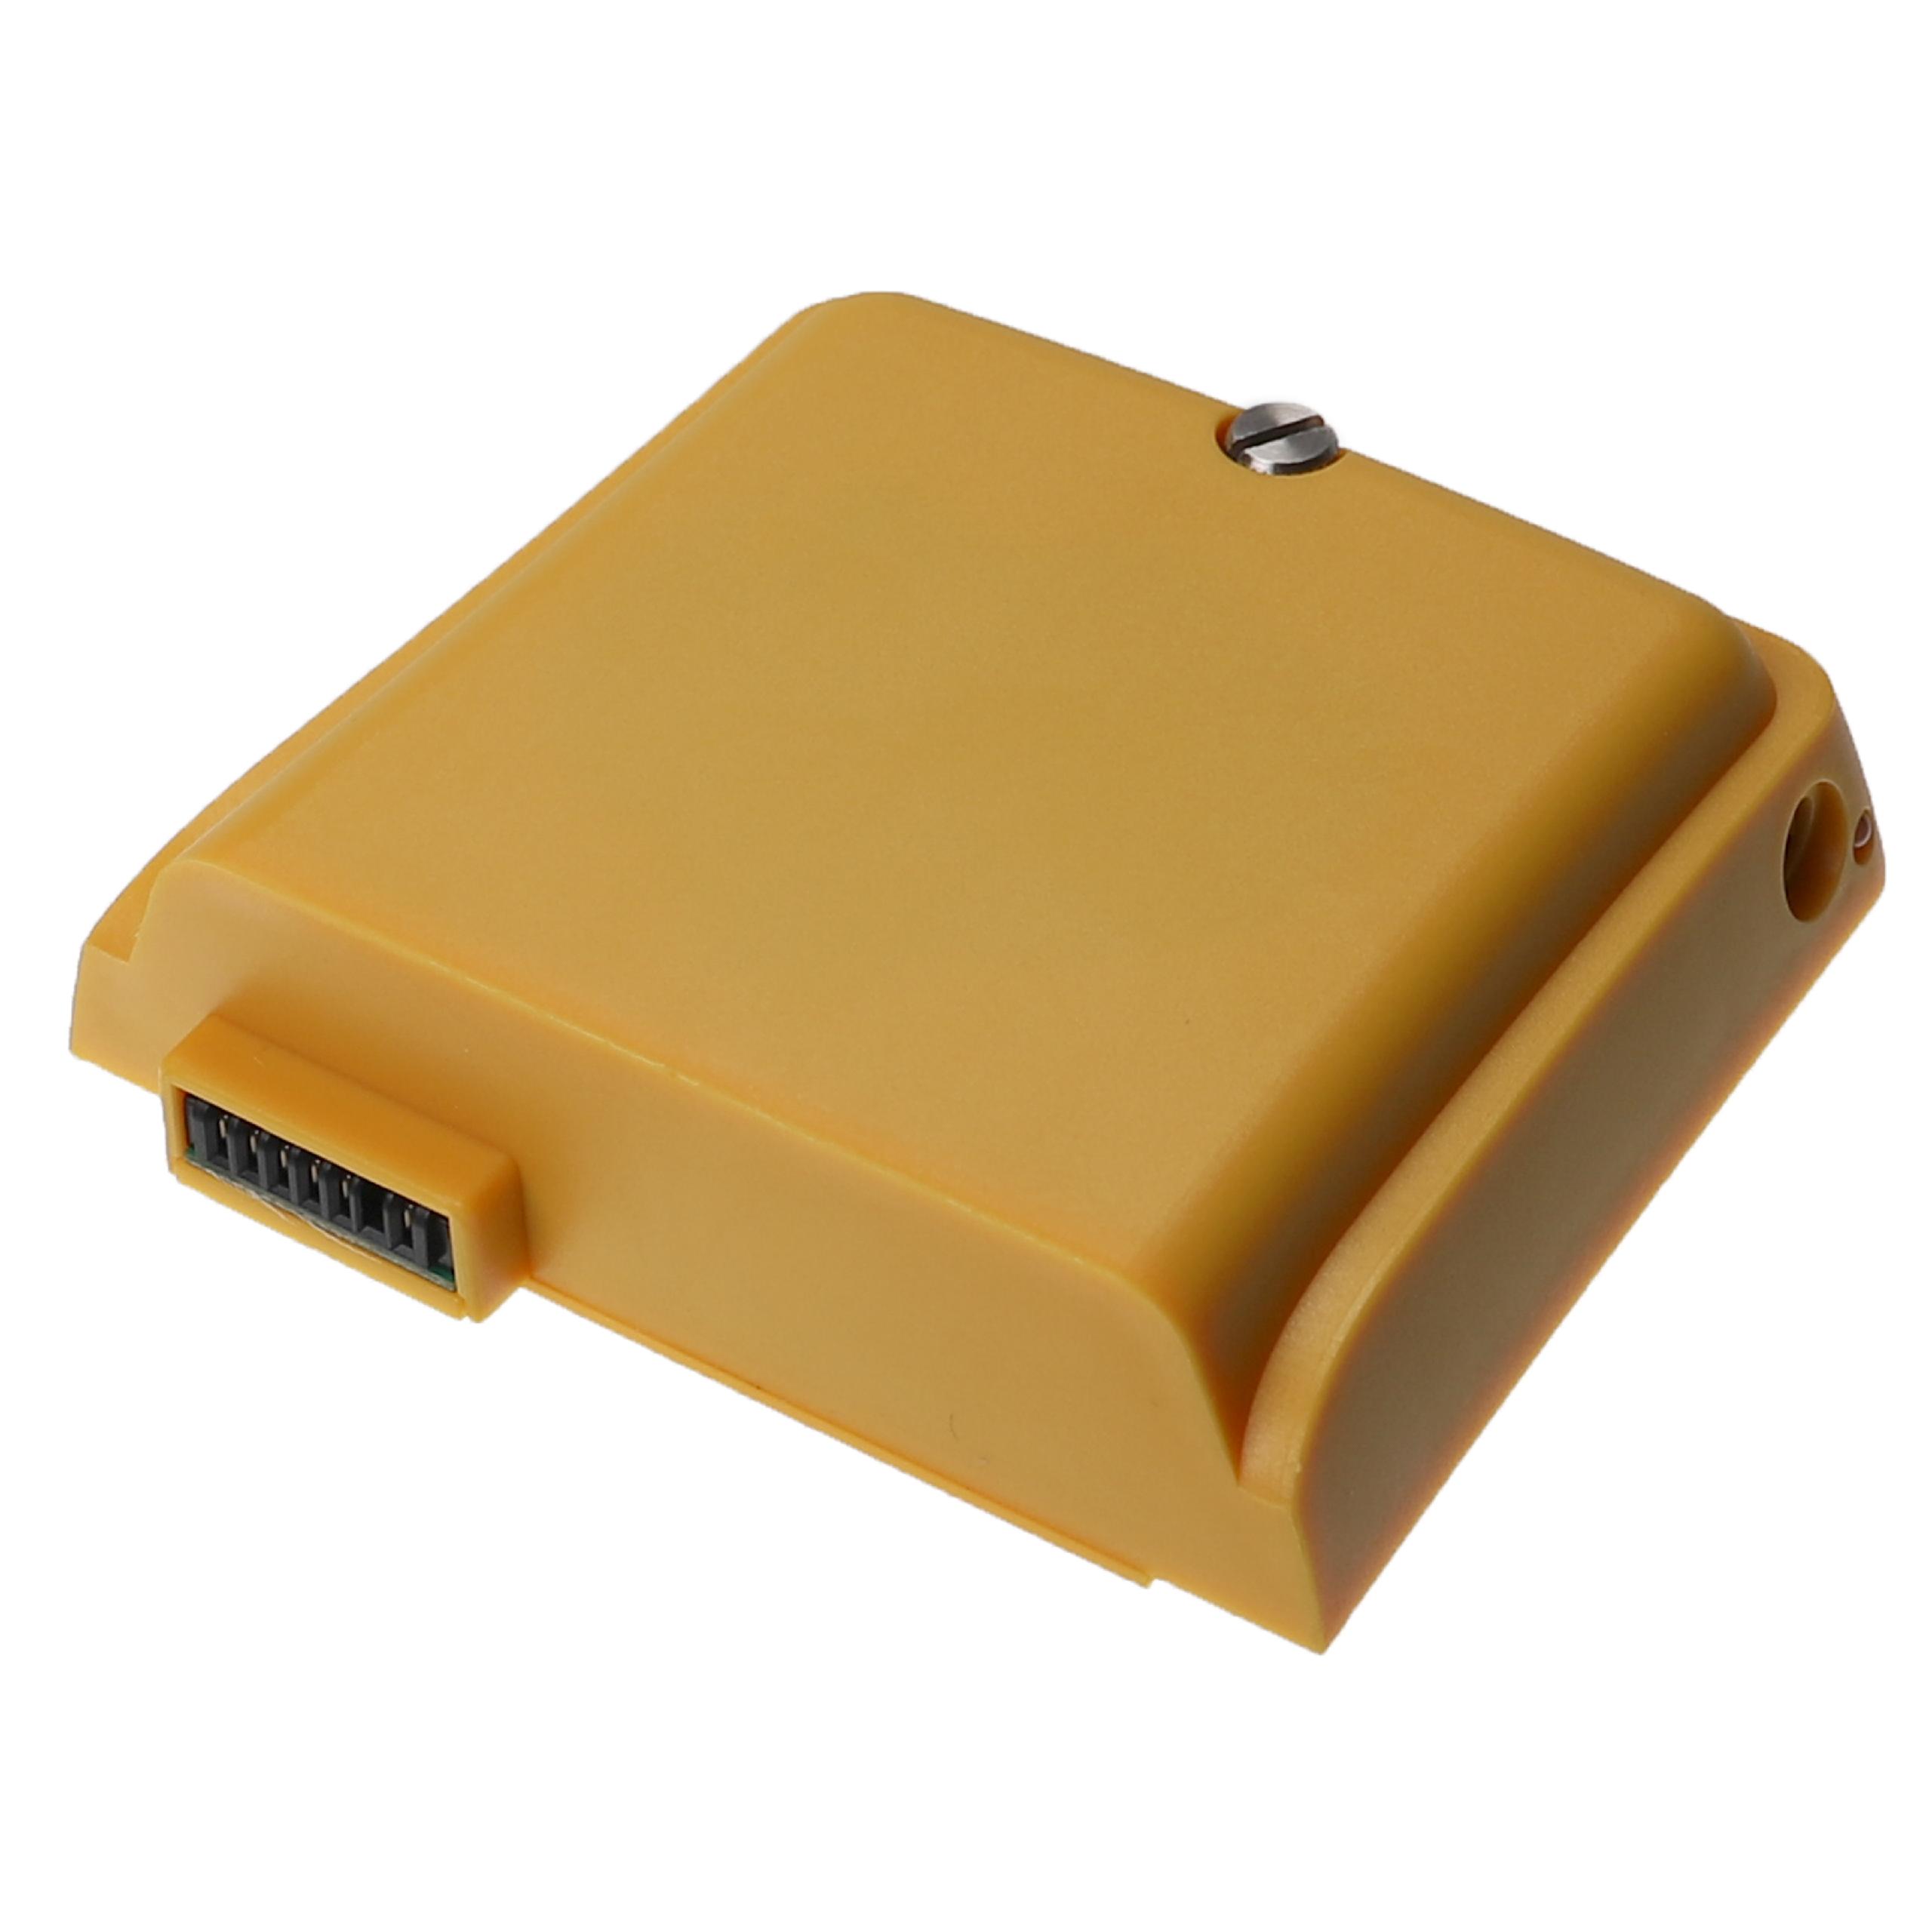 Batteria per dispositivo di misurazione sostituisce Fluke DTX-LION, BP7440 Fluke - 5200mAh 7,4V Li-Ion